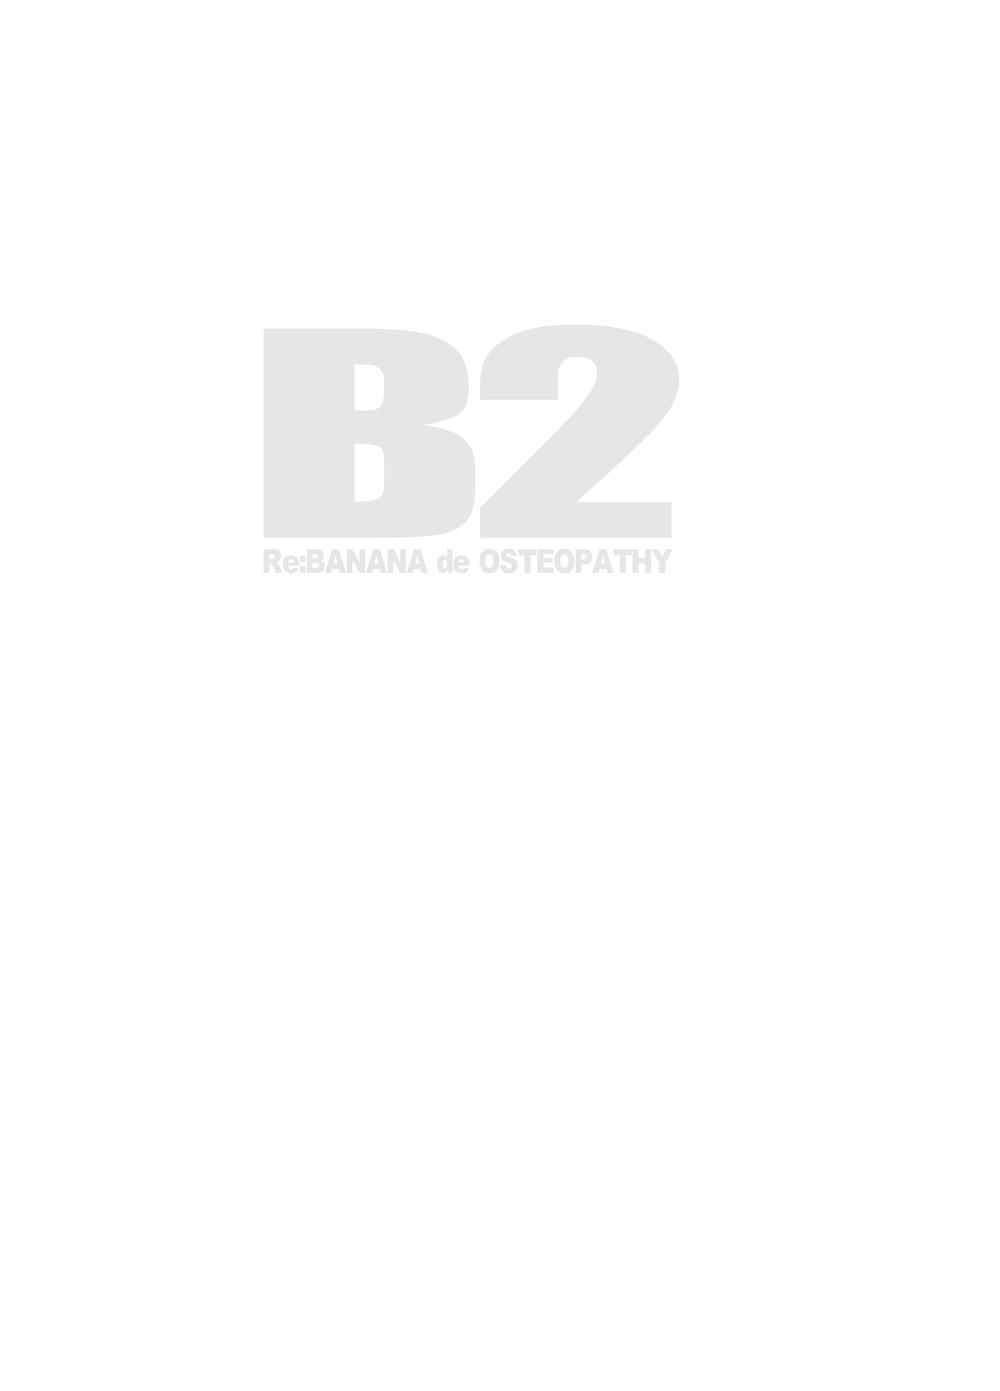 Small B2:Re BANANA de OSTEOPATHY Jacking - Page 2